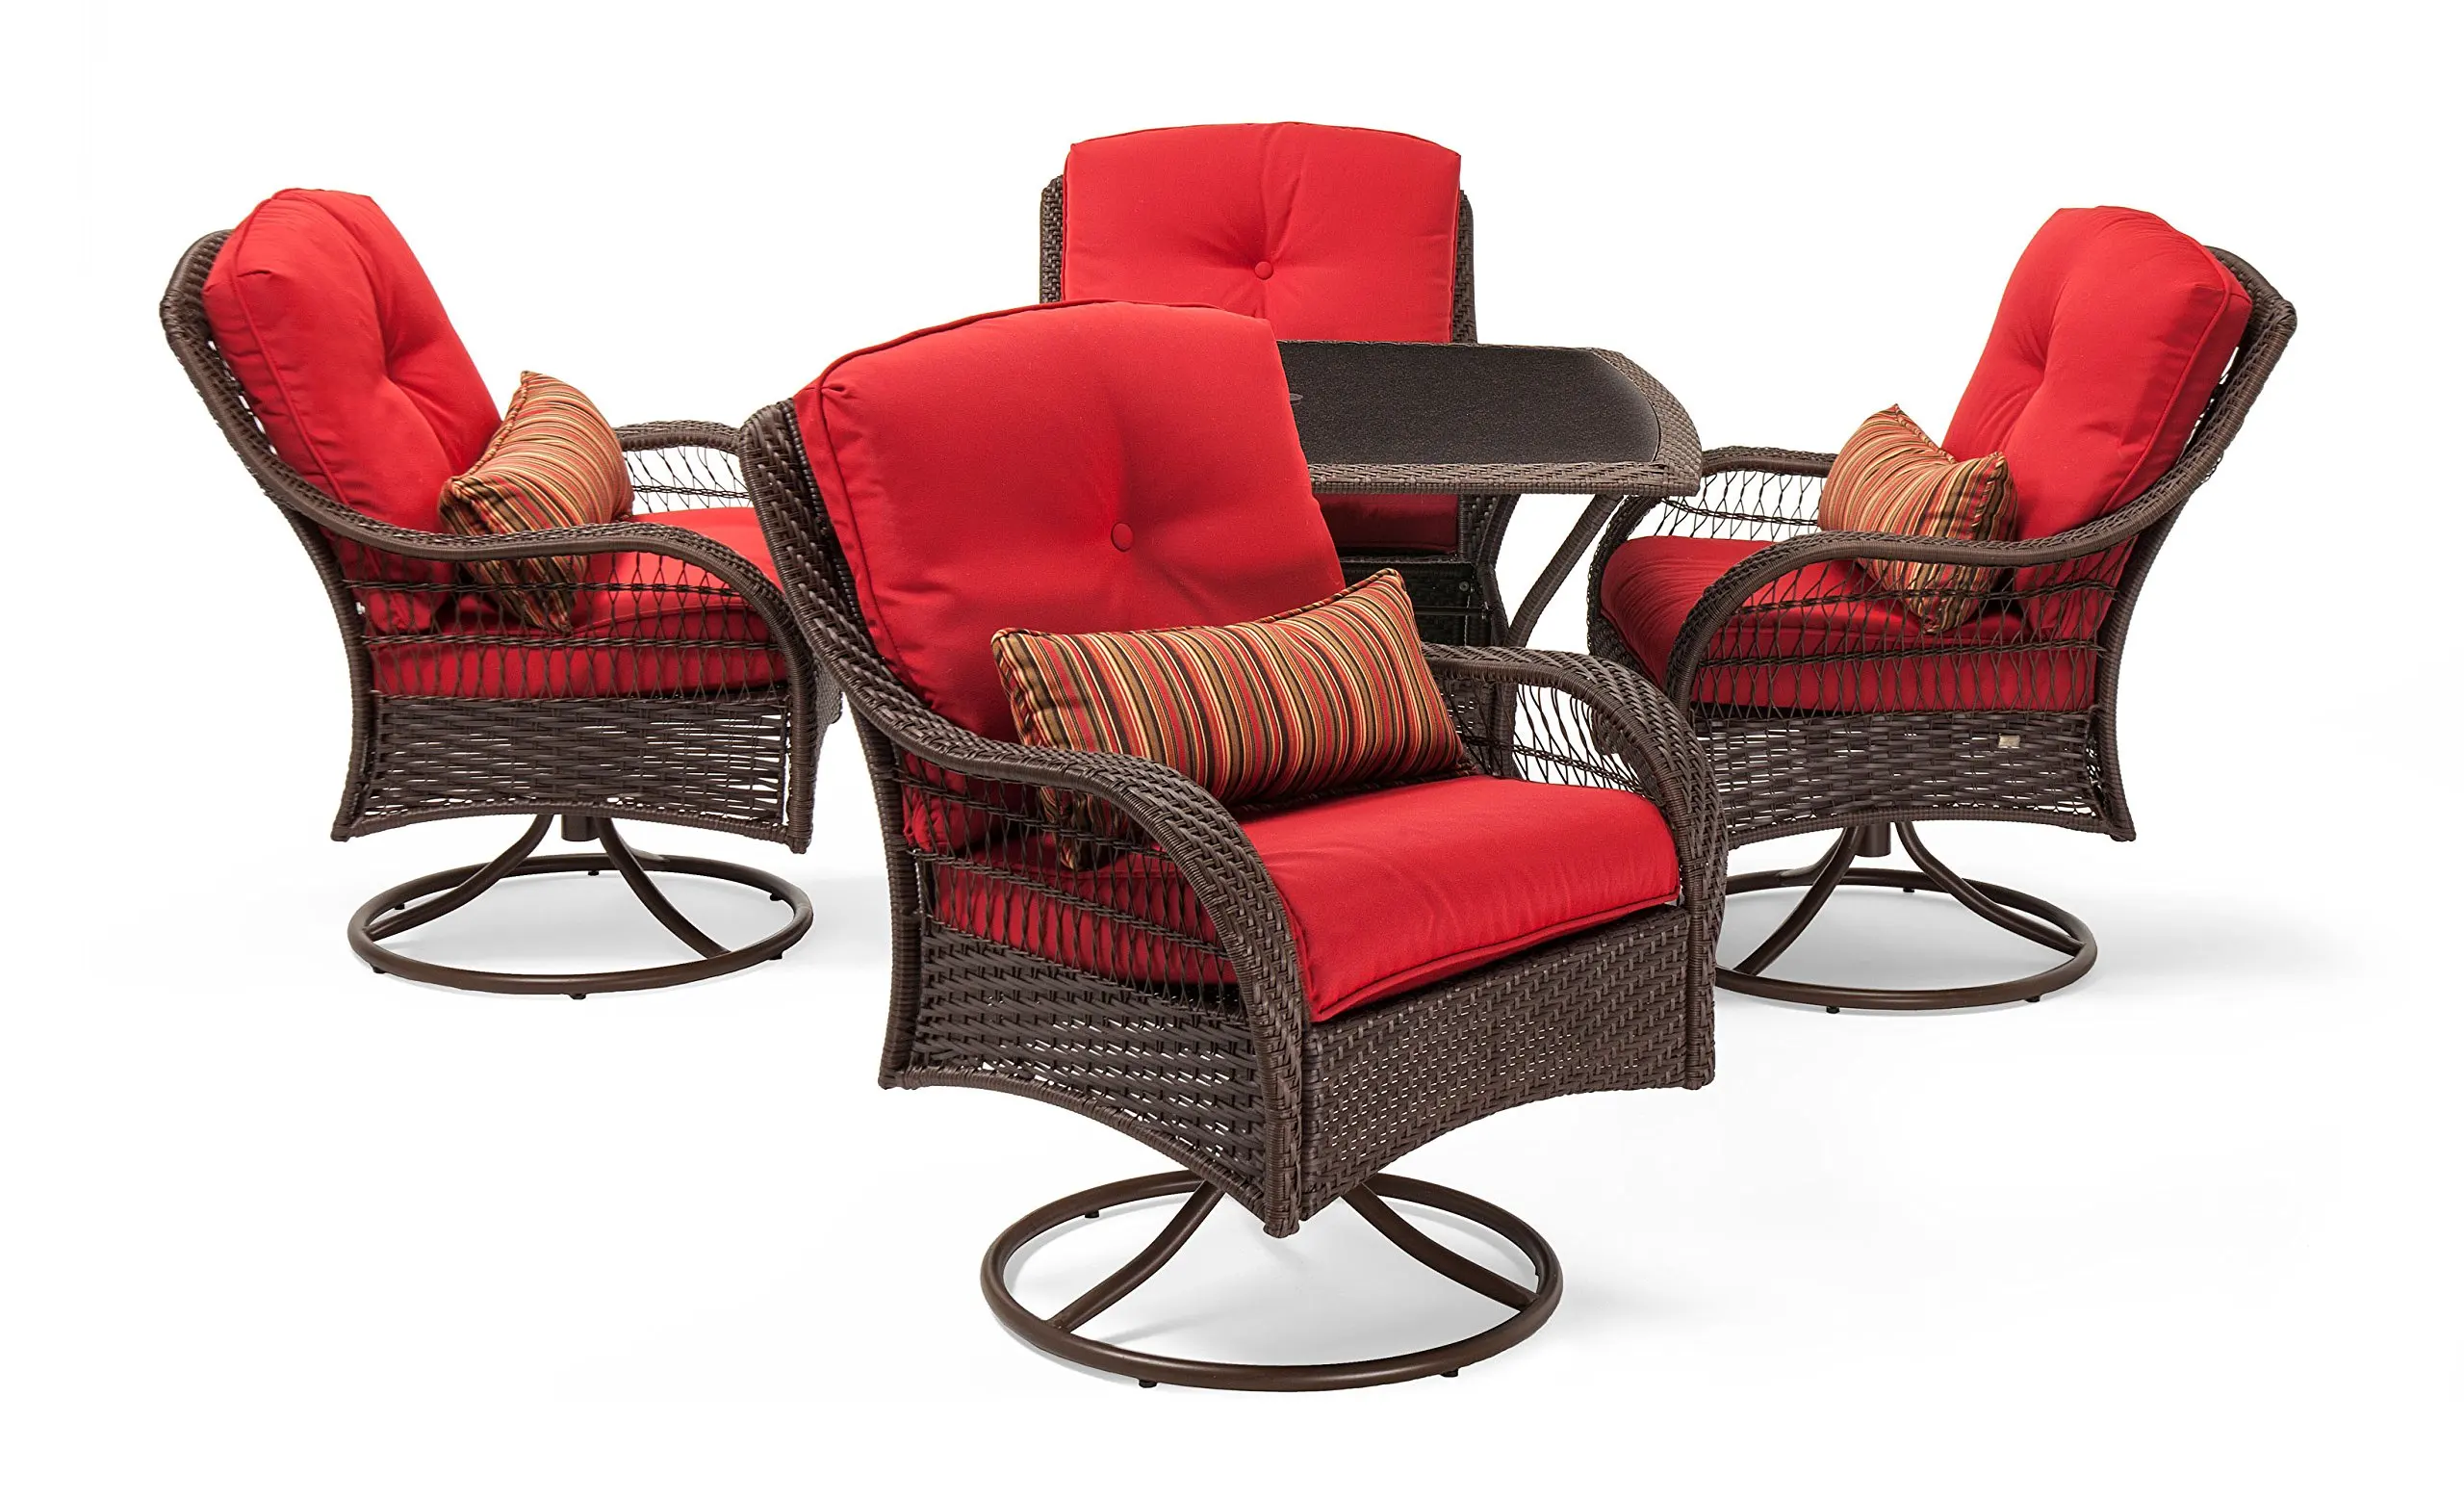 Buy DzVeX 5-Piece Outdoor Patio Wicker Dining Set And patio furniture